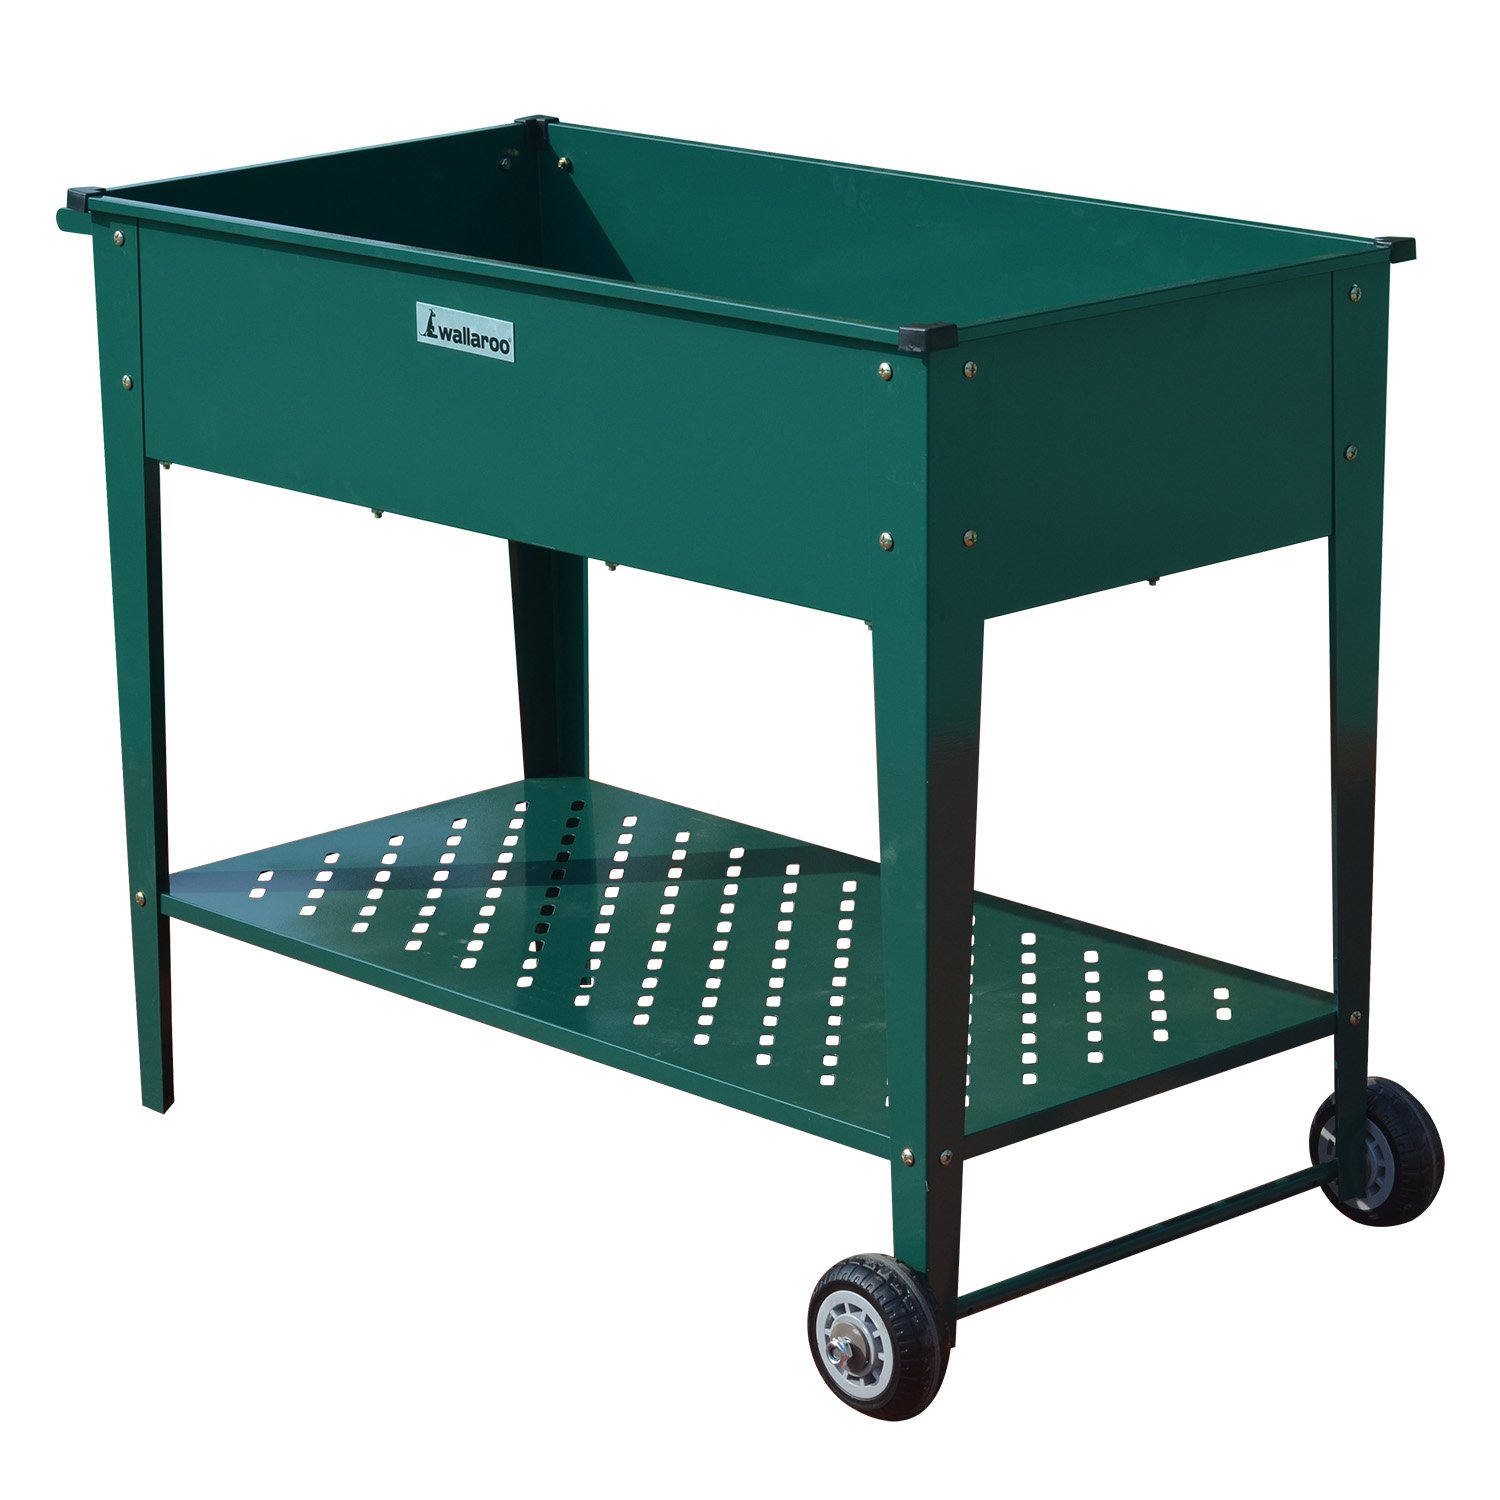 Wallaroo Garden Bed Cart Raised Planter Box 108.5 x 50.5 x 80cm Galvanized Steel - Green 1